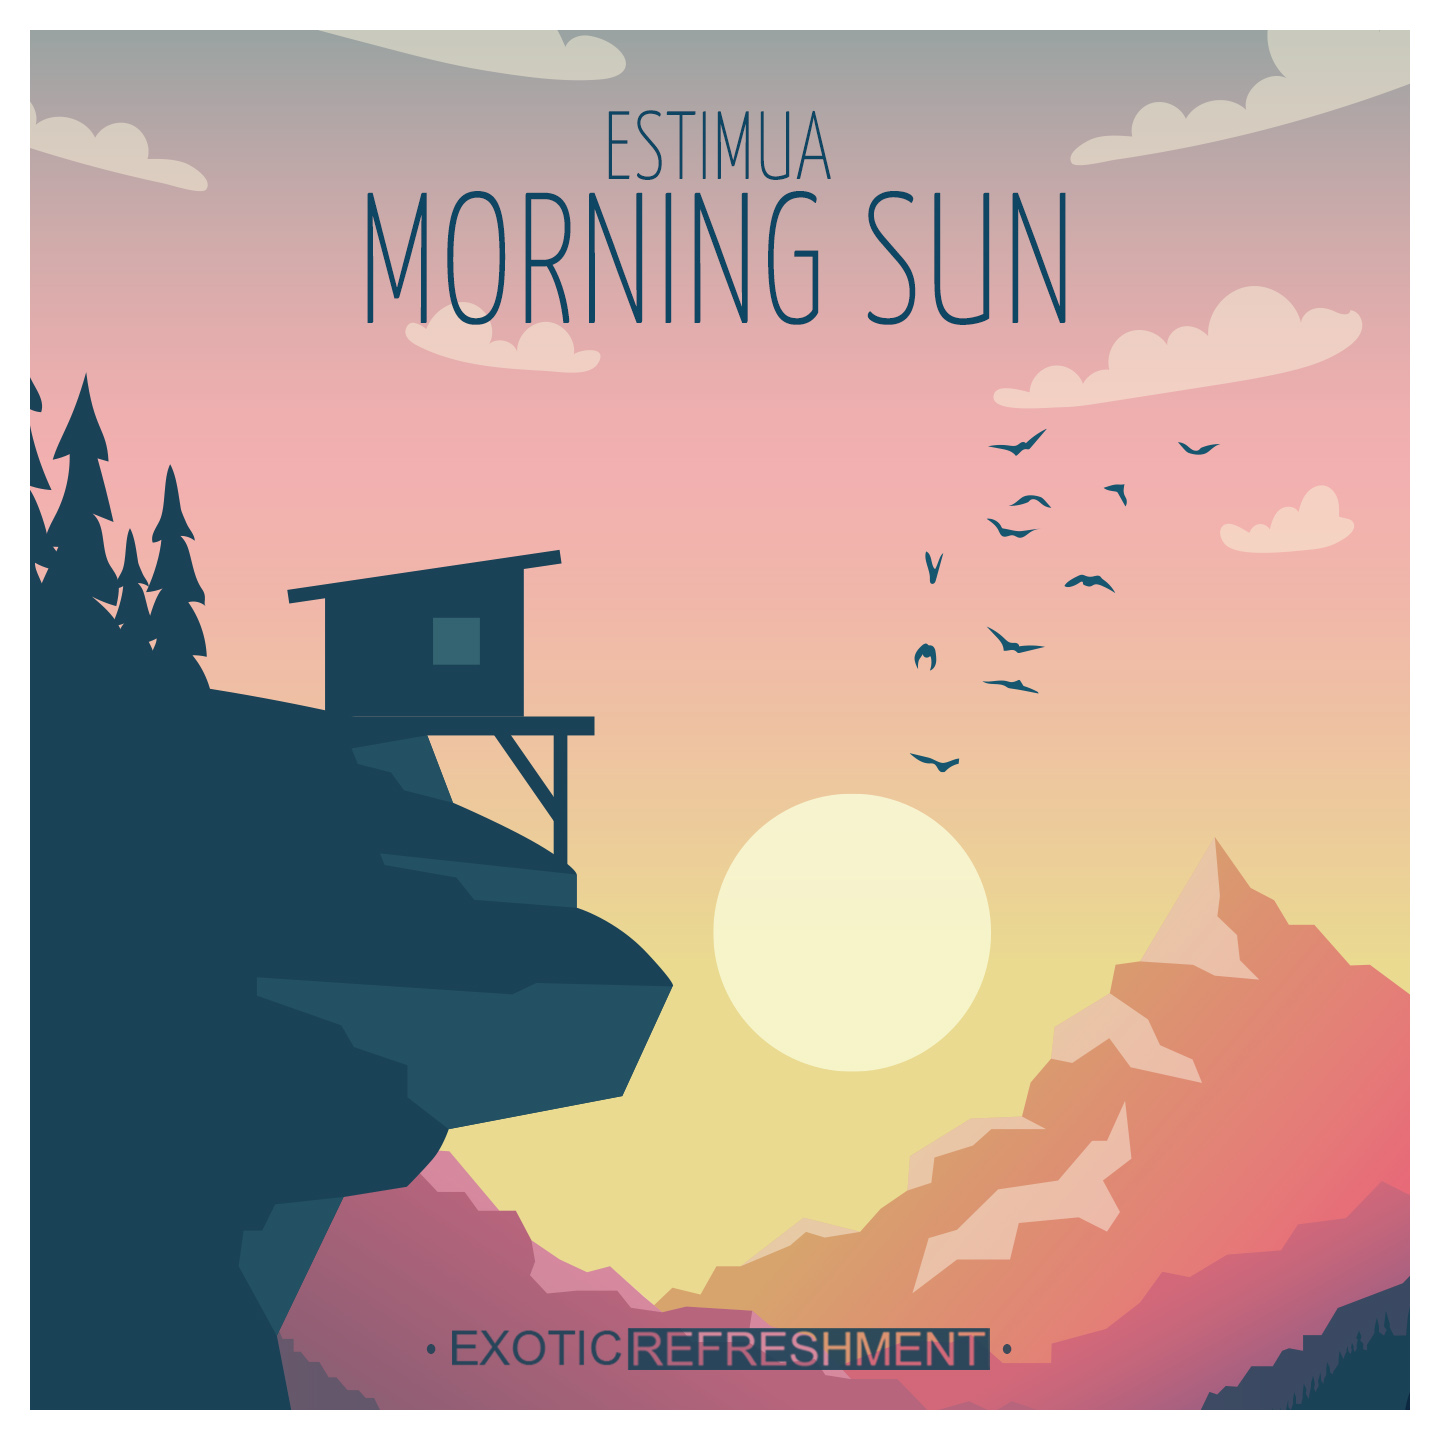 estimua - Morning Sun